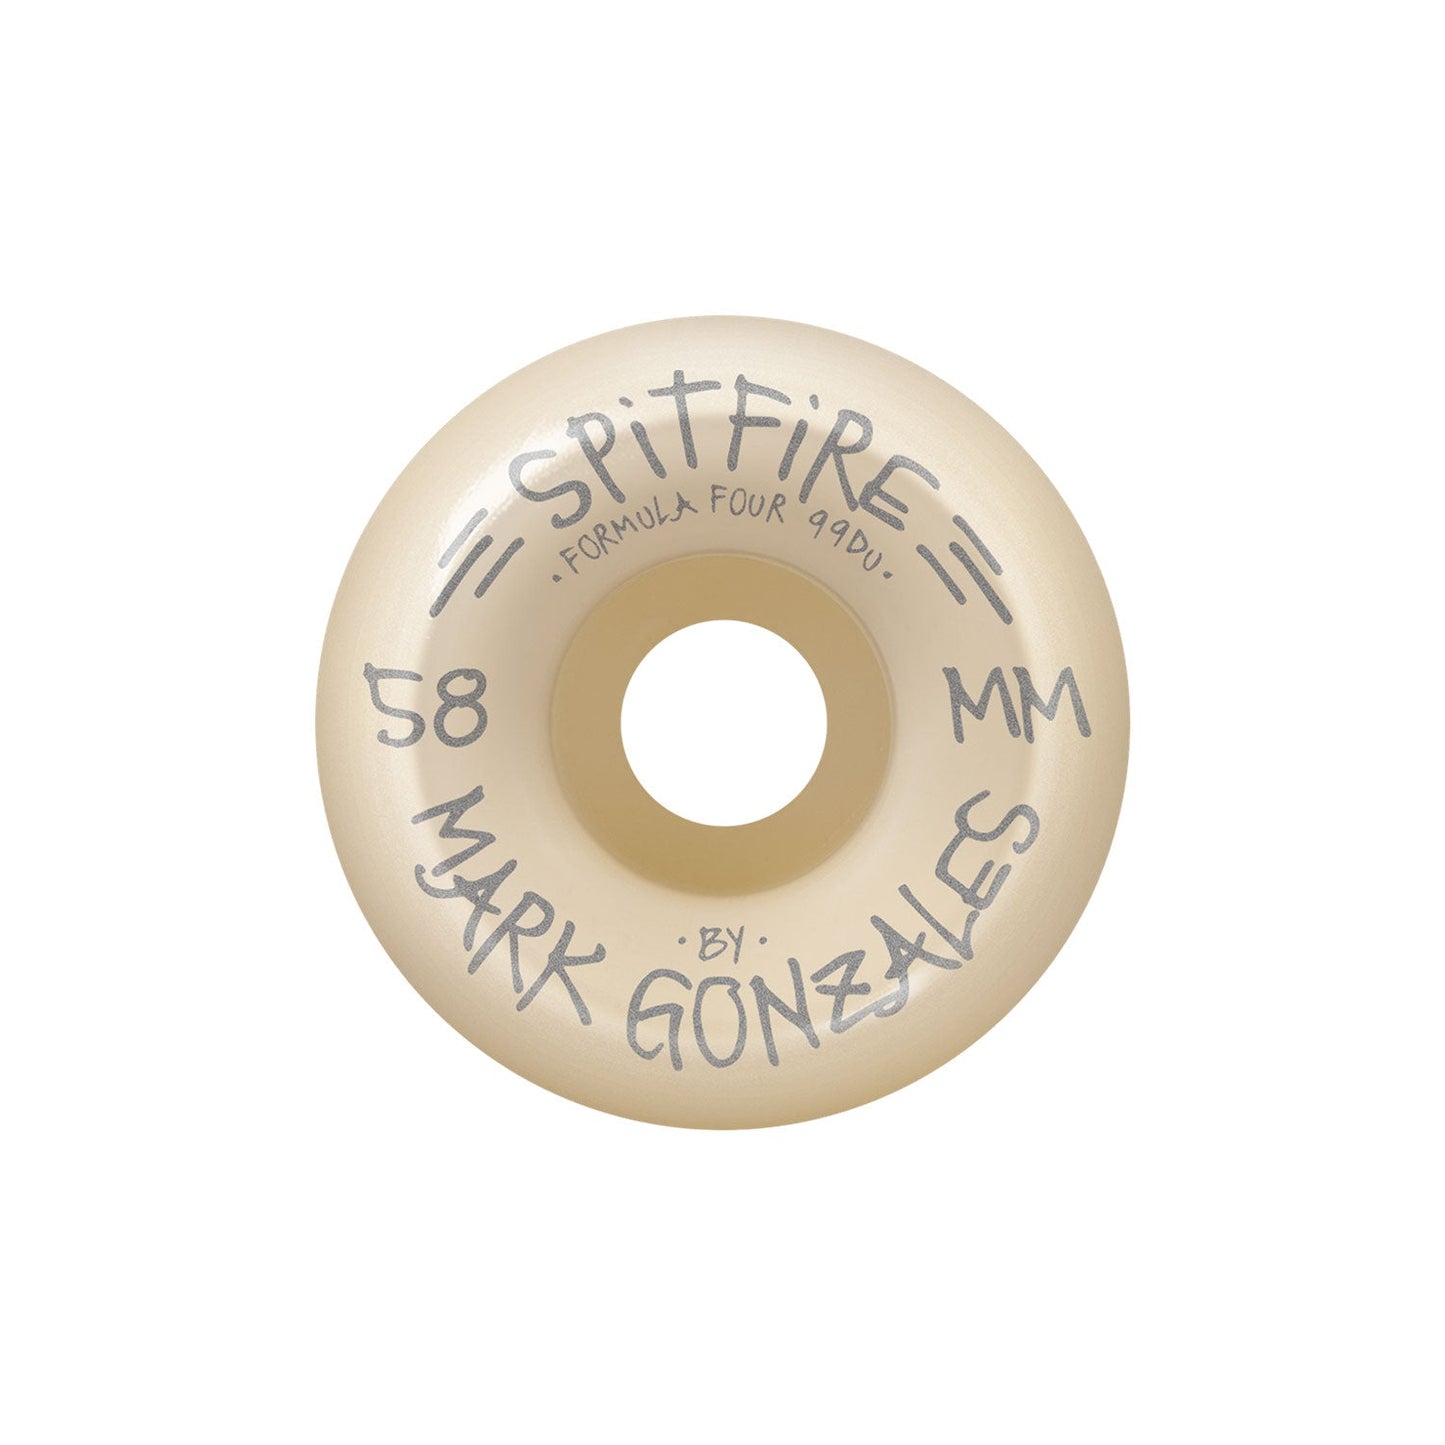 Spitfire Gonz Birds F4 99 Conical Full Wheels (58mm) - Tiki Room Skateboards - 2